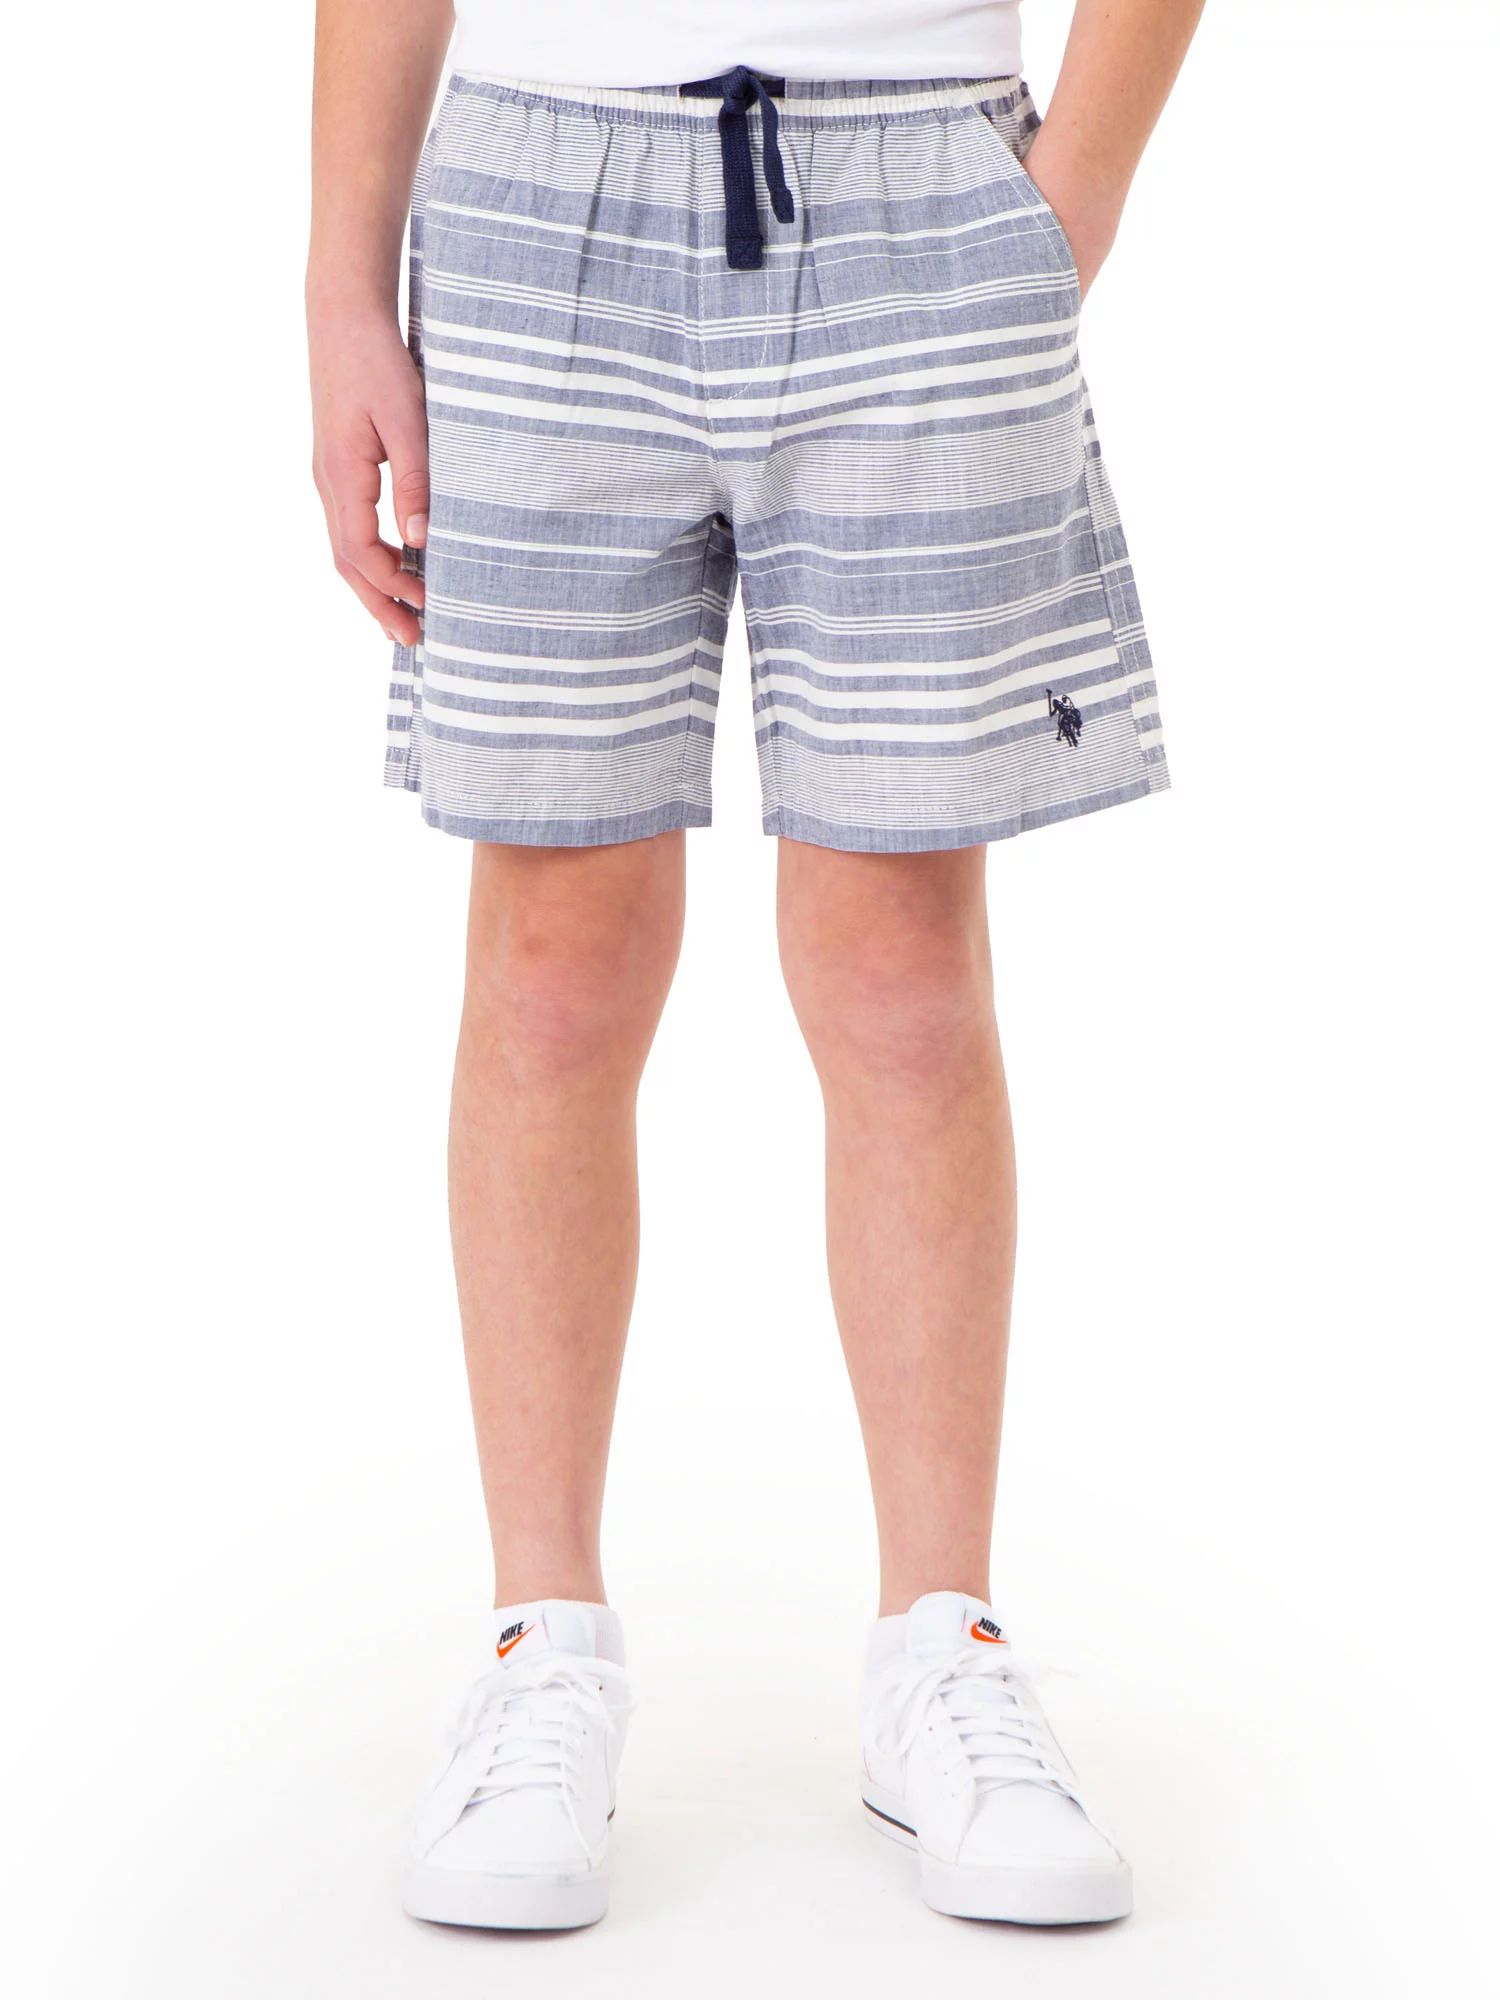 U.S. Polo Assn. Boys Stripe Short, Sizes 4-18 | Walmart (US)